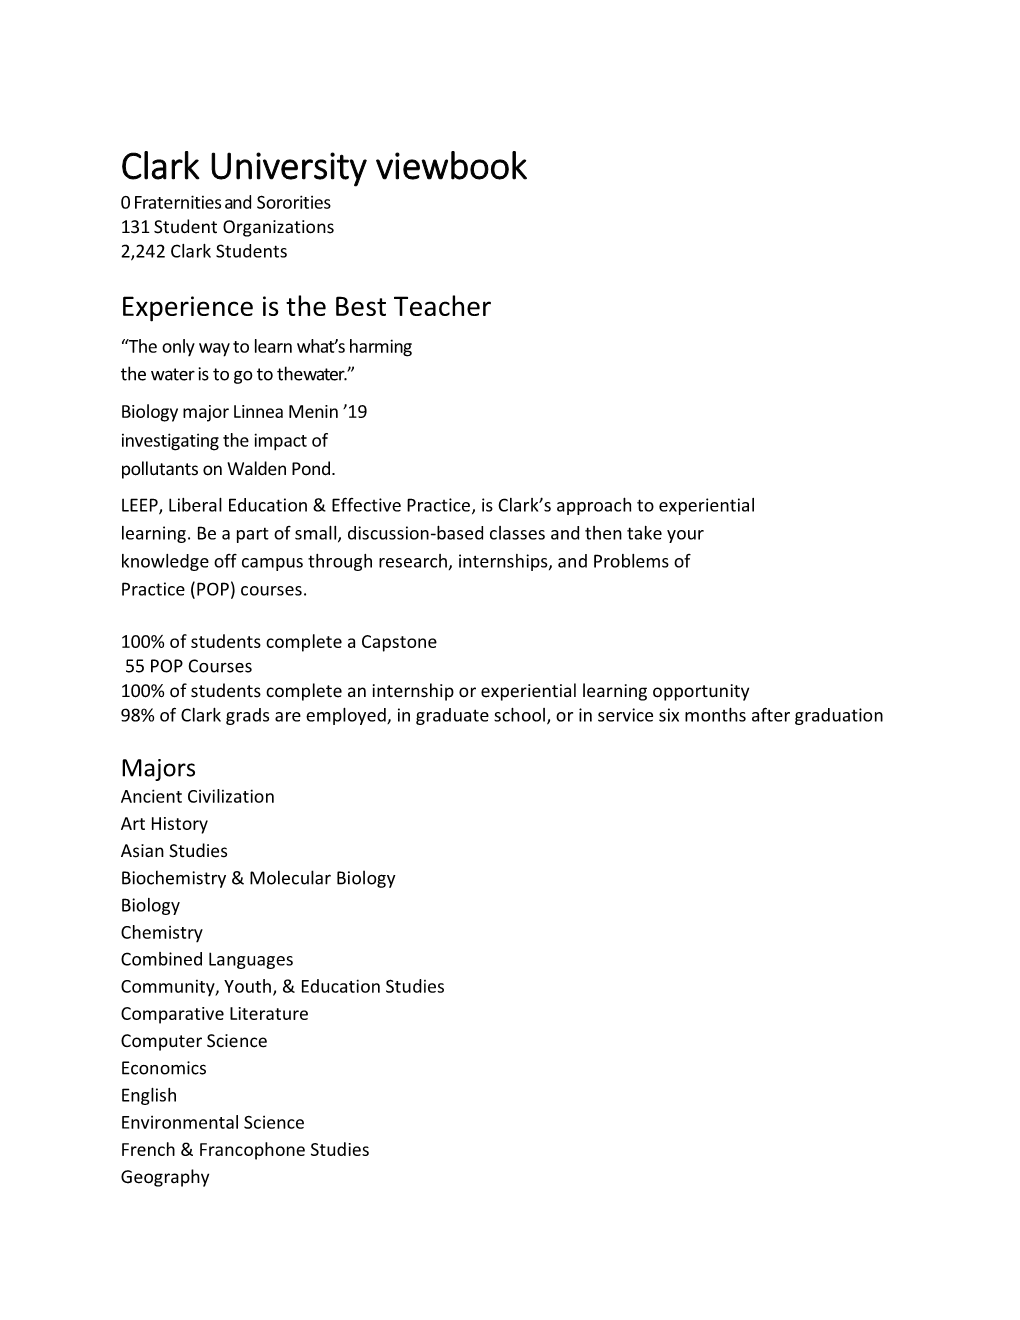 Clark University Viewbook 0 Fraternities and Sororities 131 Student Organizations 2,242 Clark Students